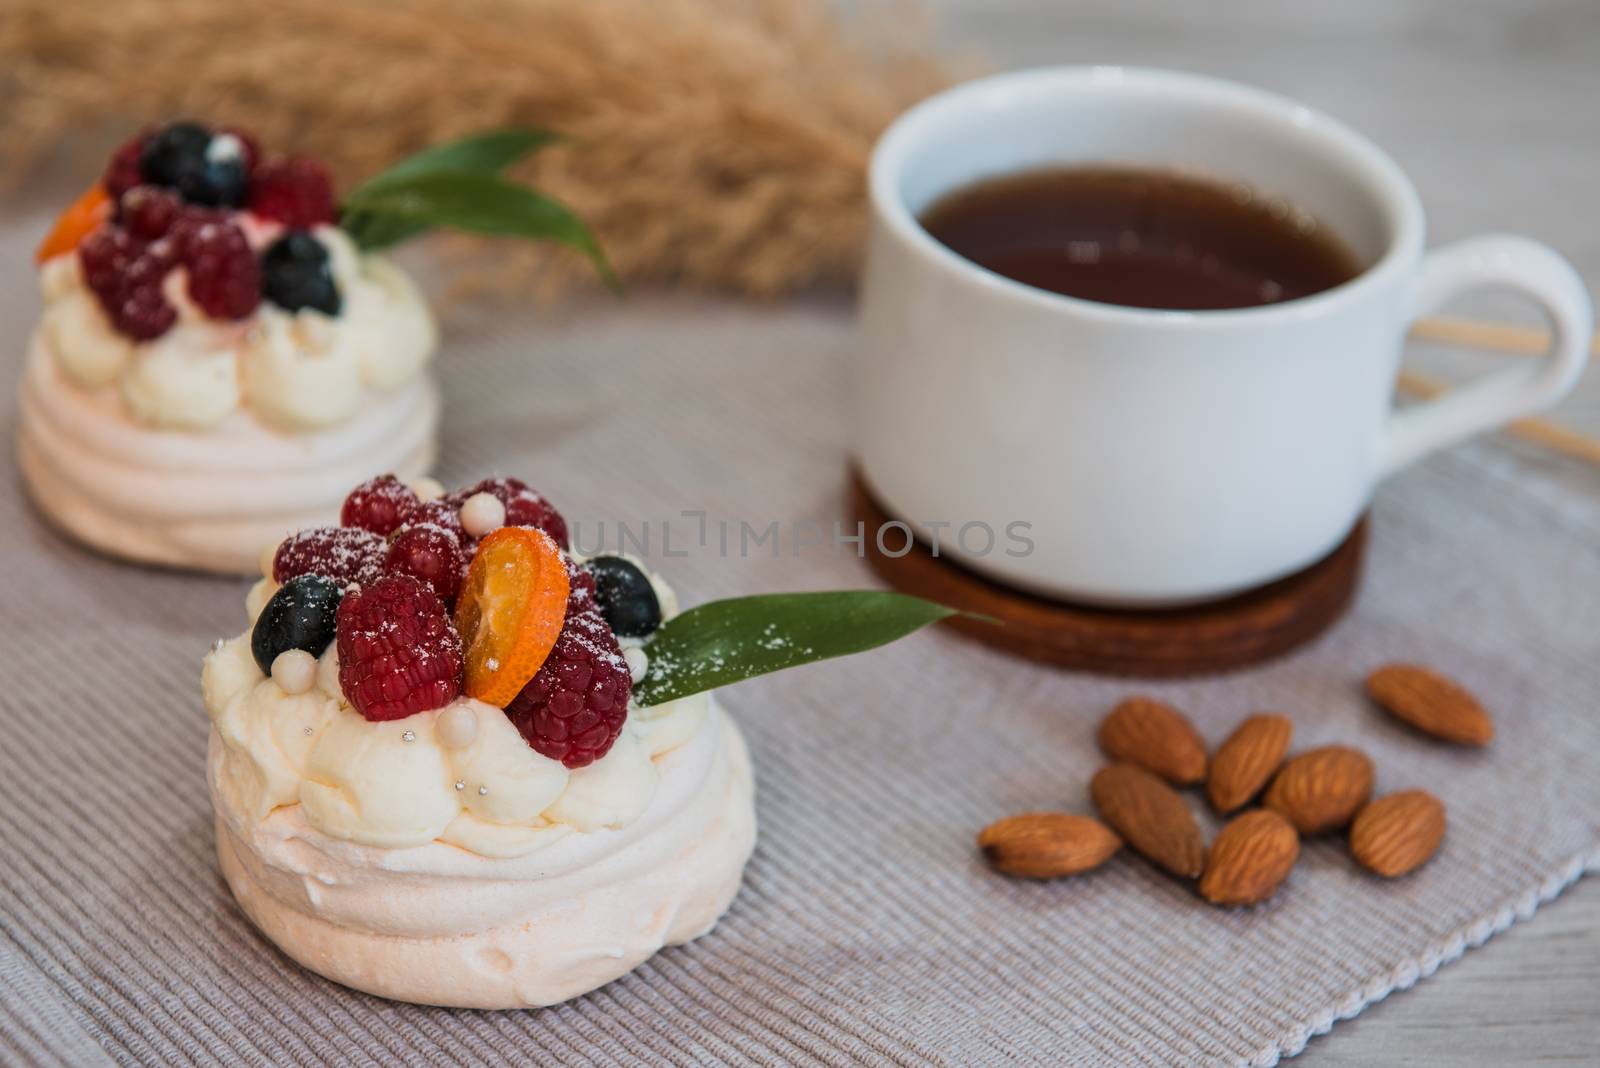 Pavlova meringue cake with cream and small fruits by marynkin